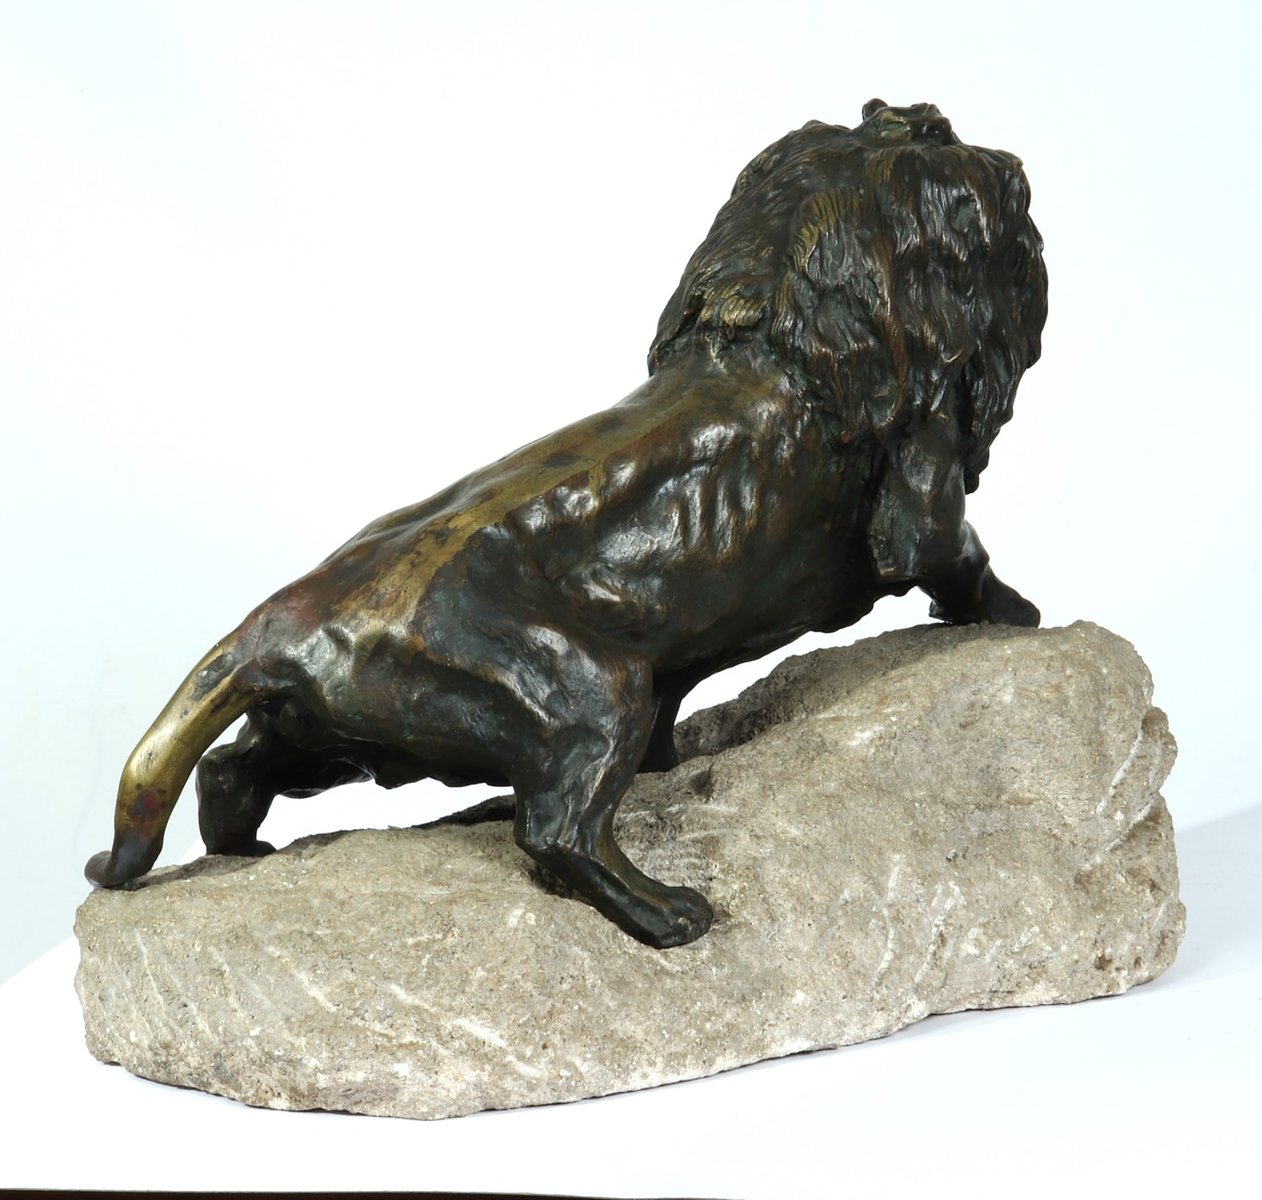 t cartier bronze lion price